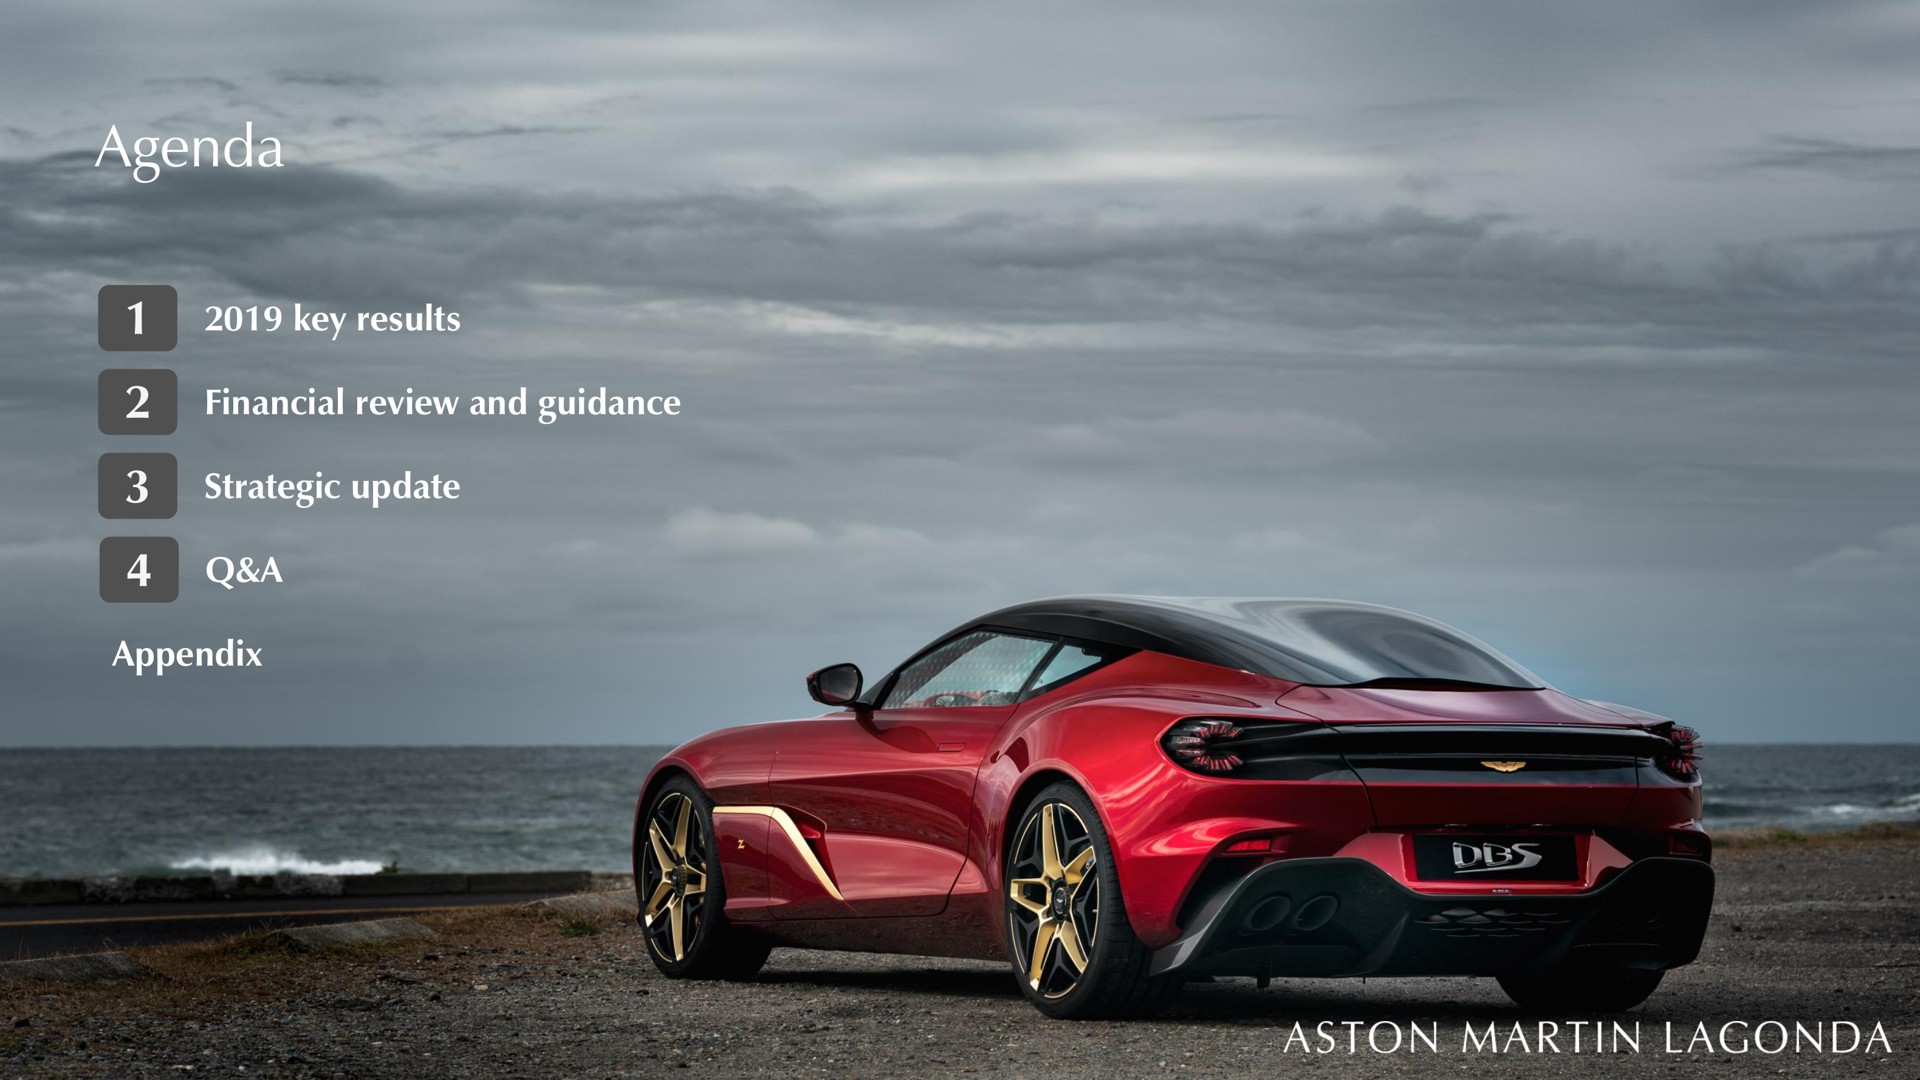 agenda | Aston Martin Lagonda